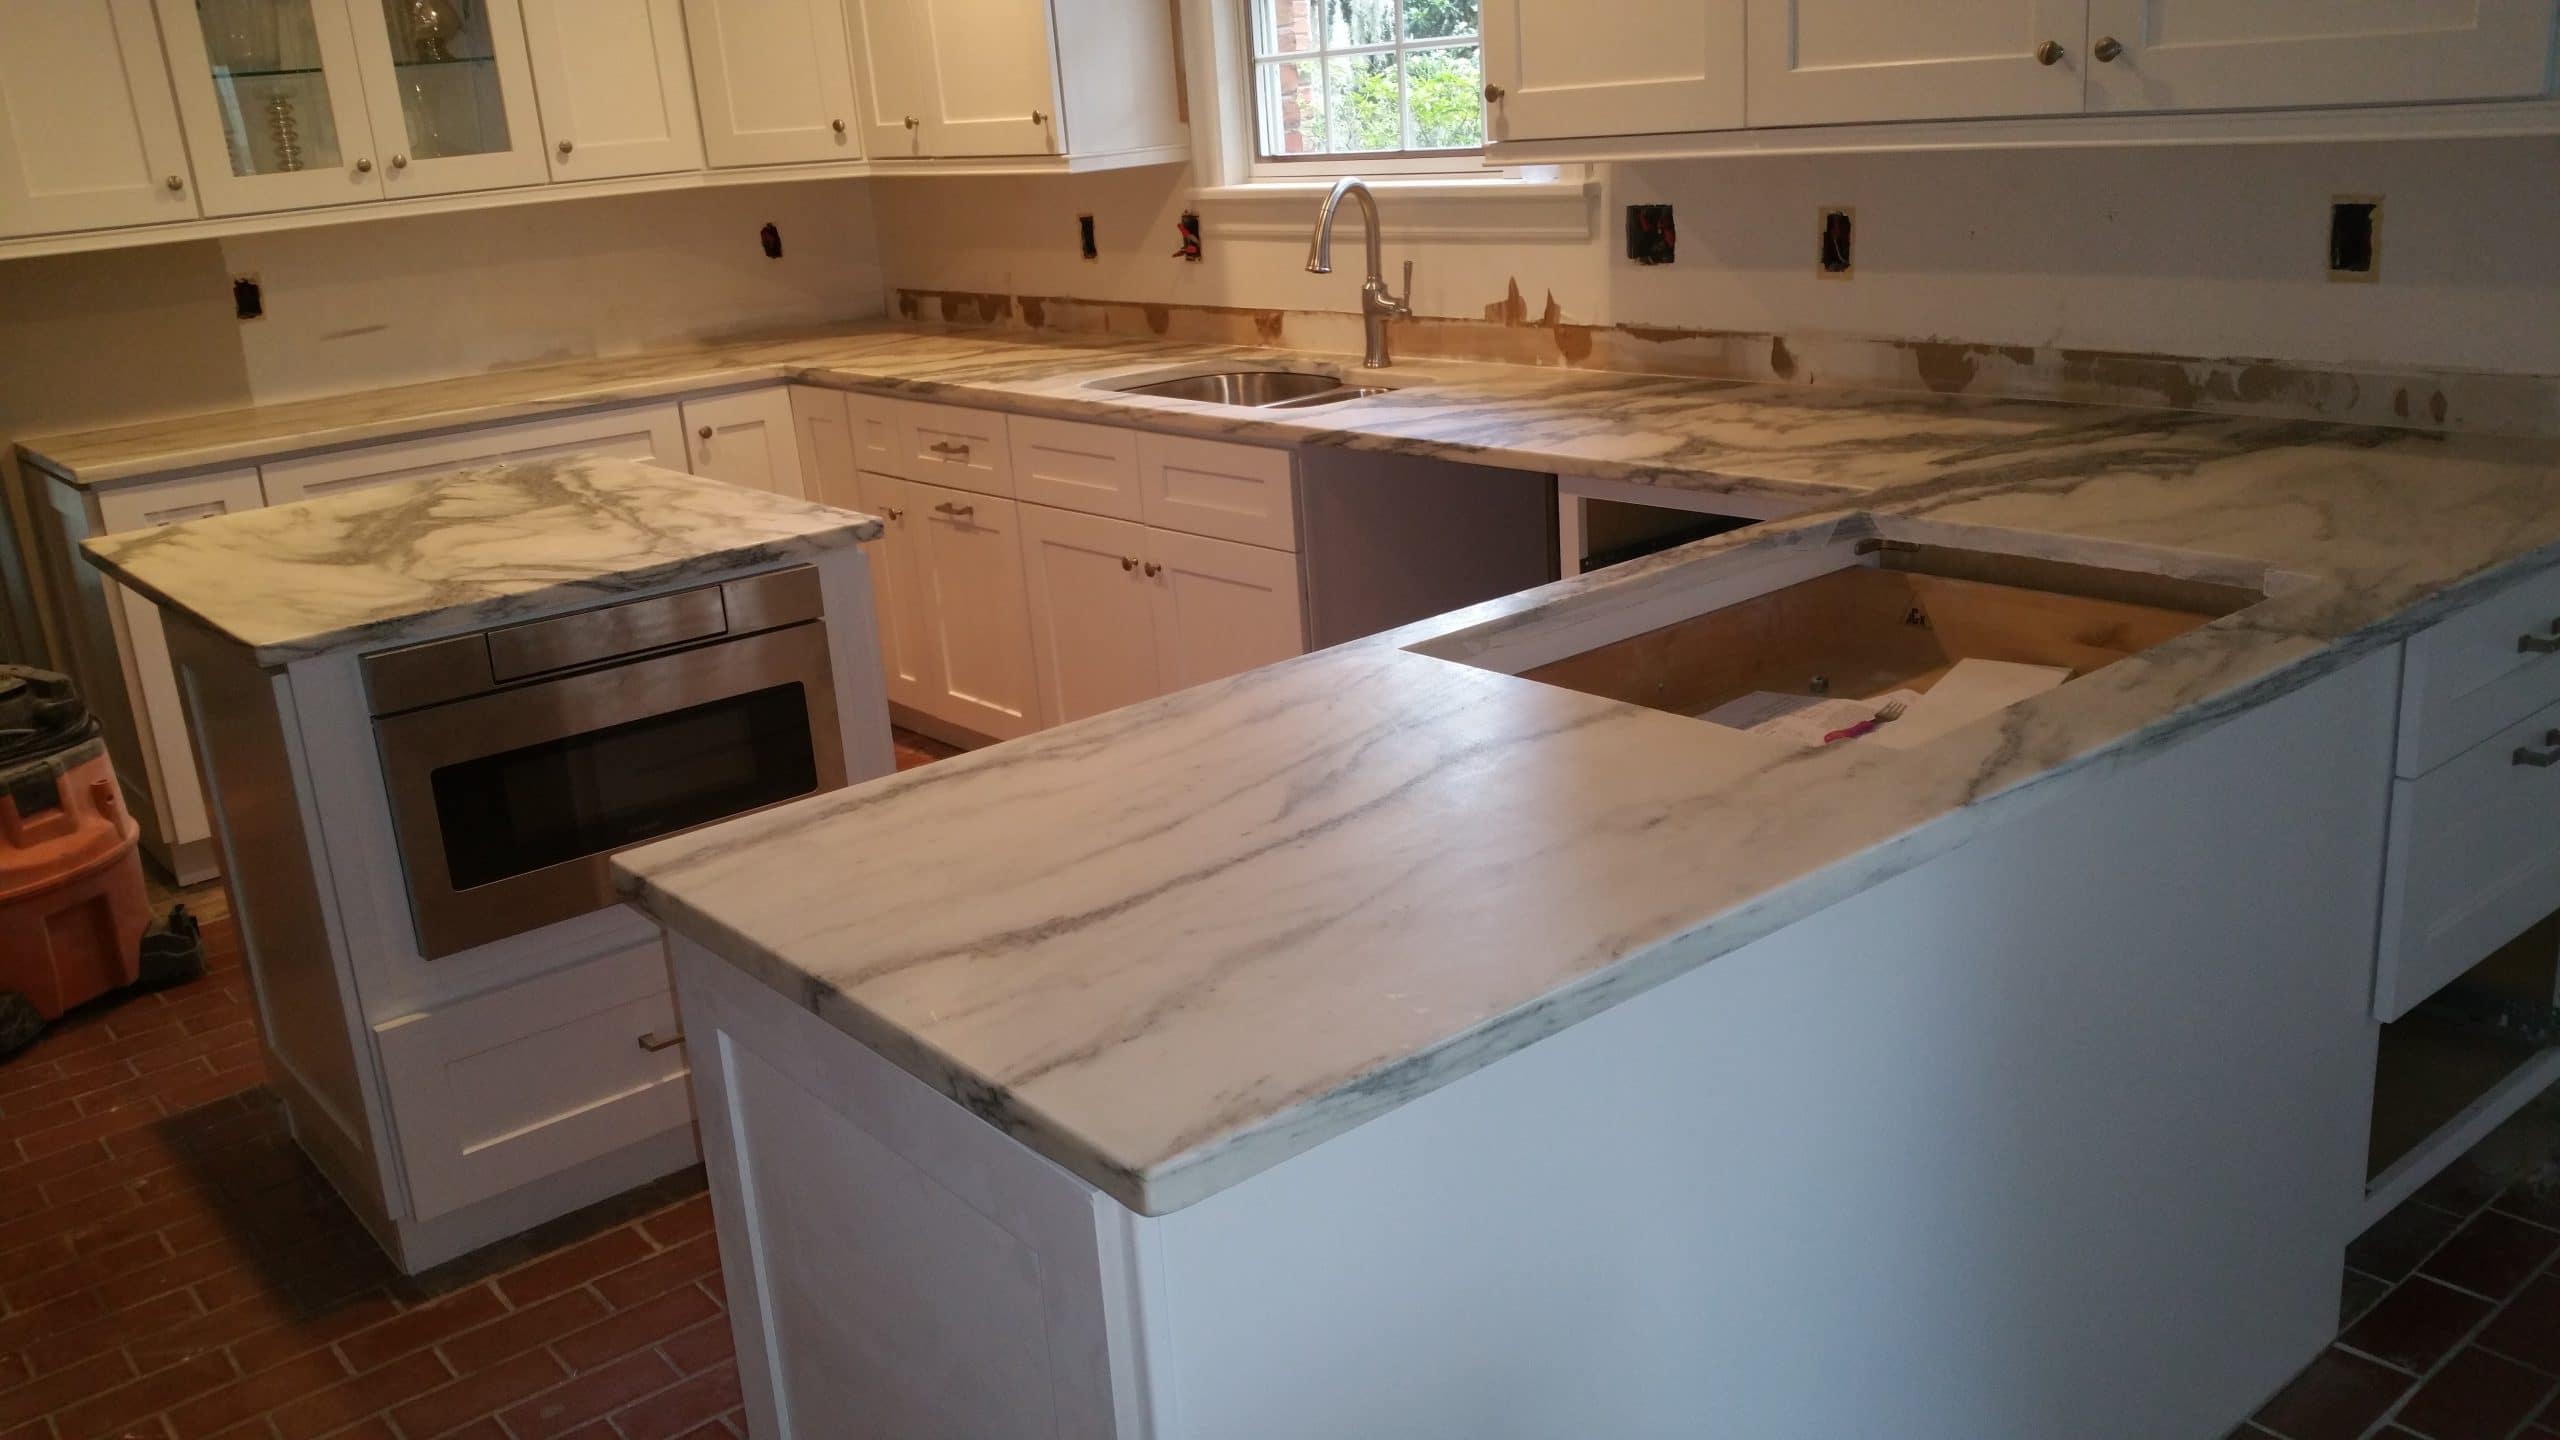 The perfect granite countertop surface